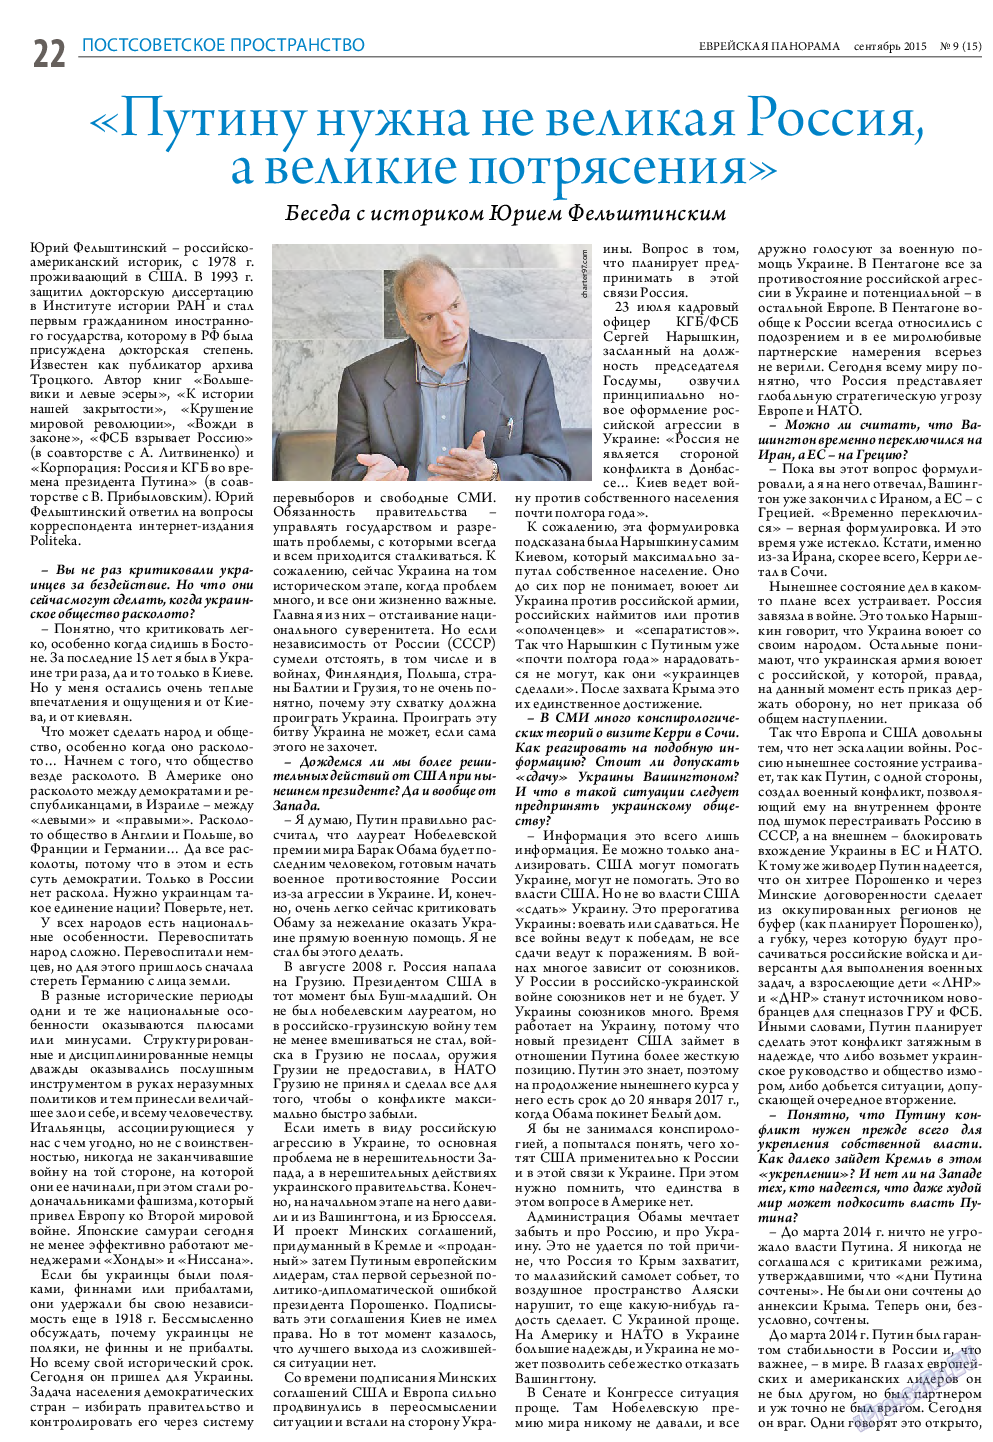 Еврейская панорама, газета. 2015 №9 стр.22